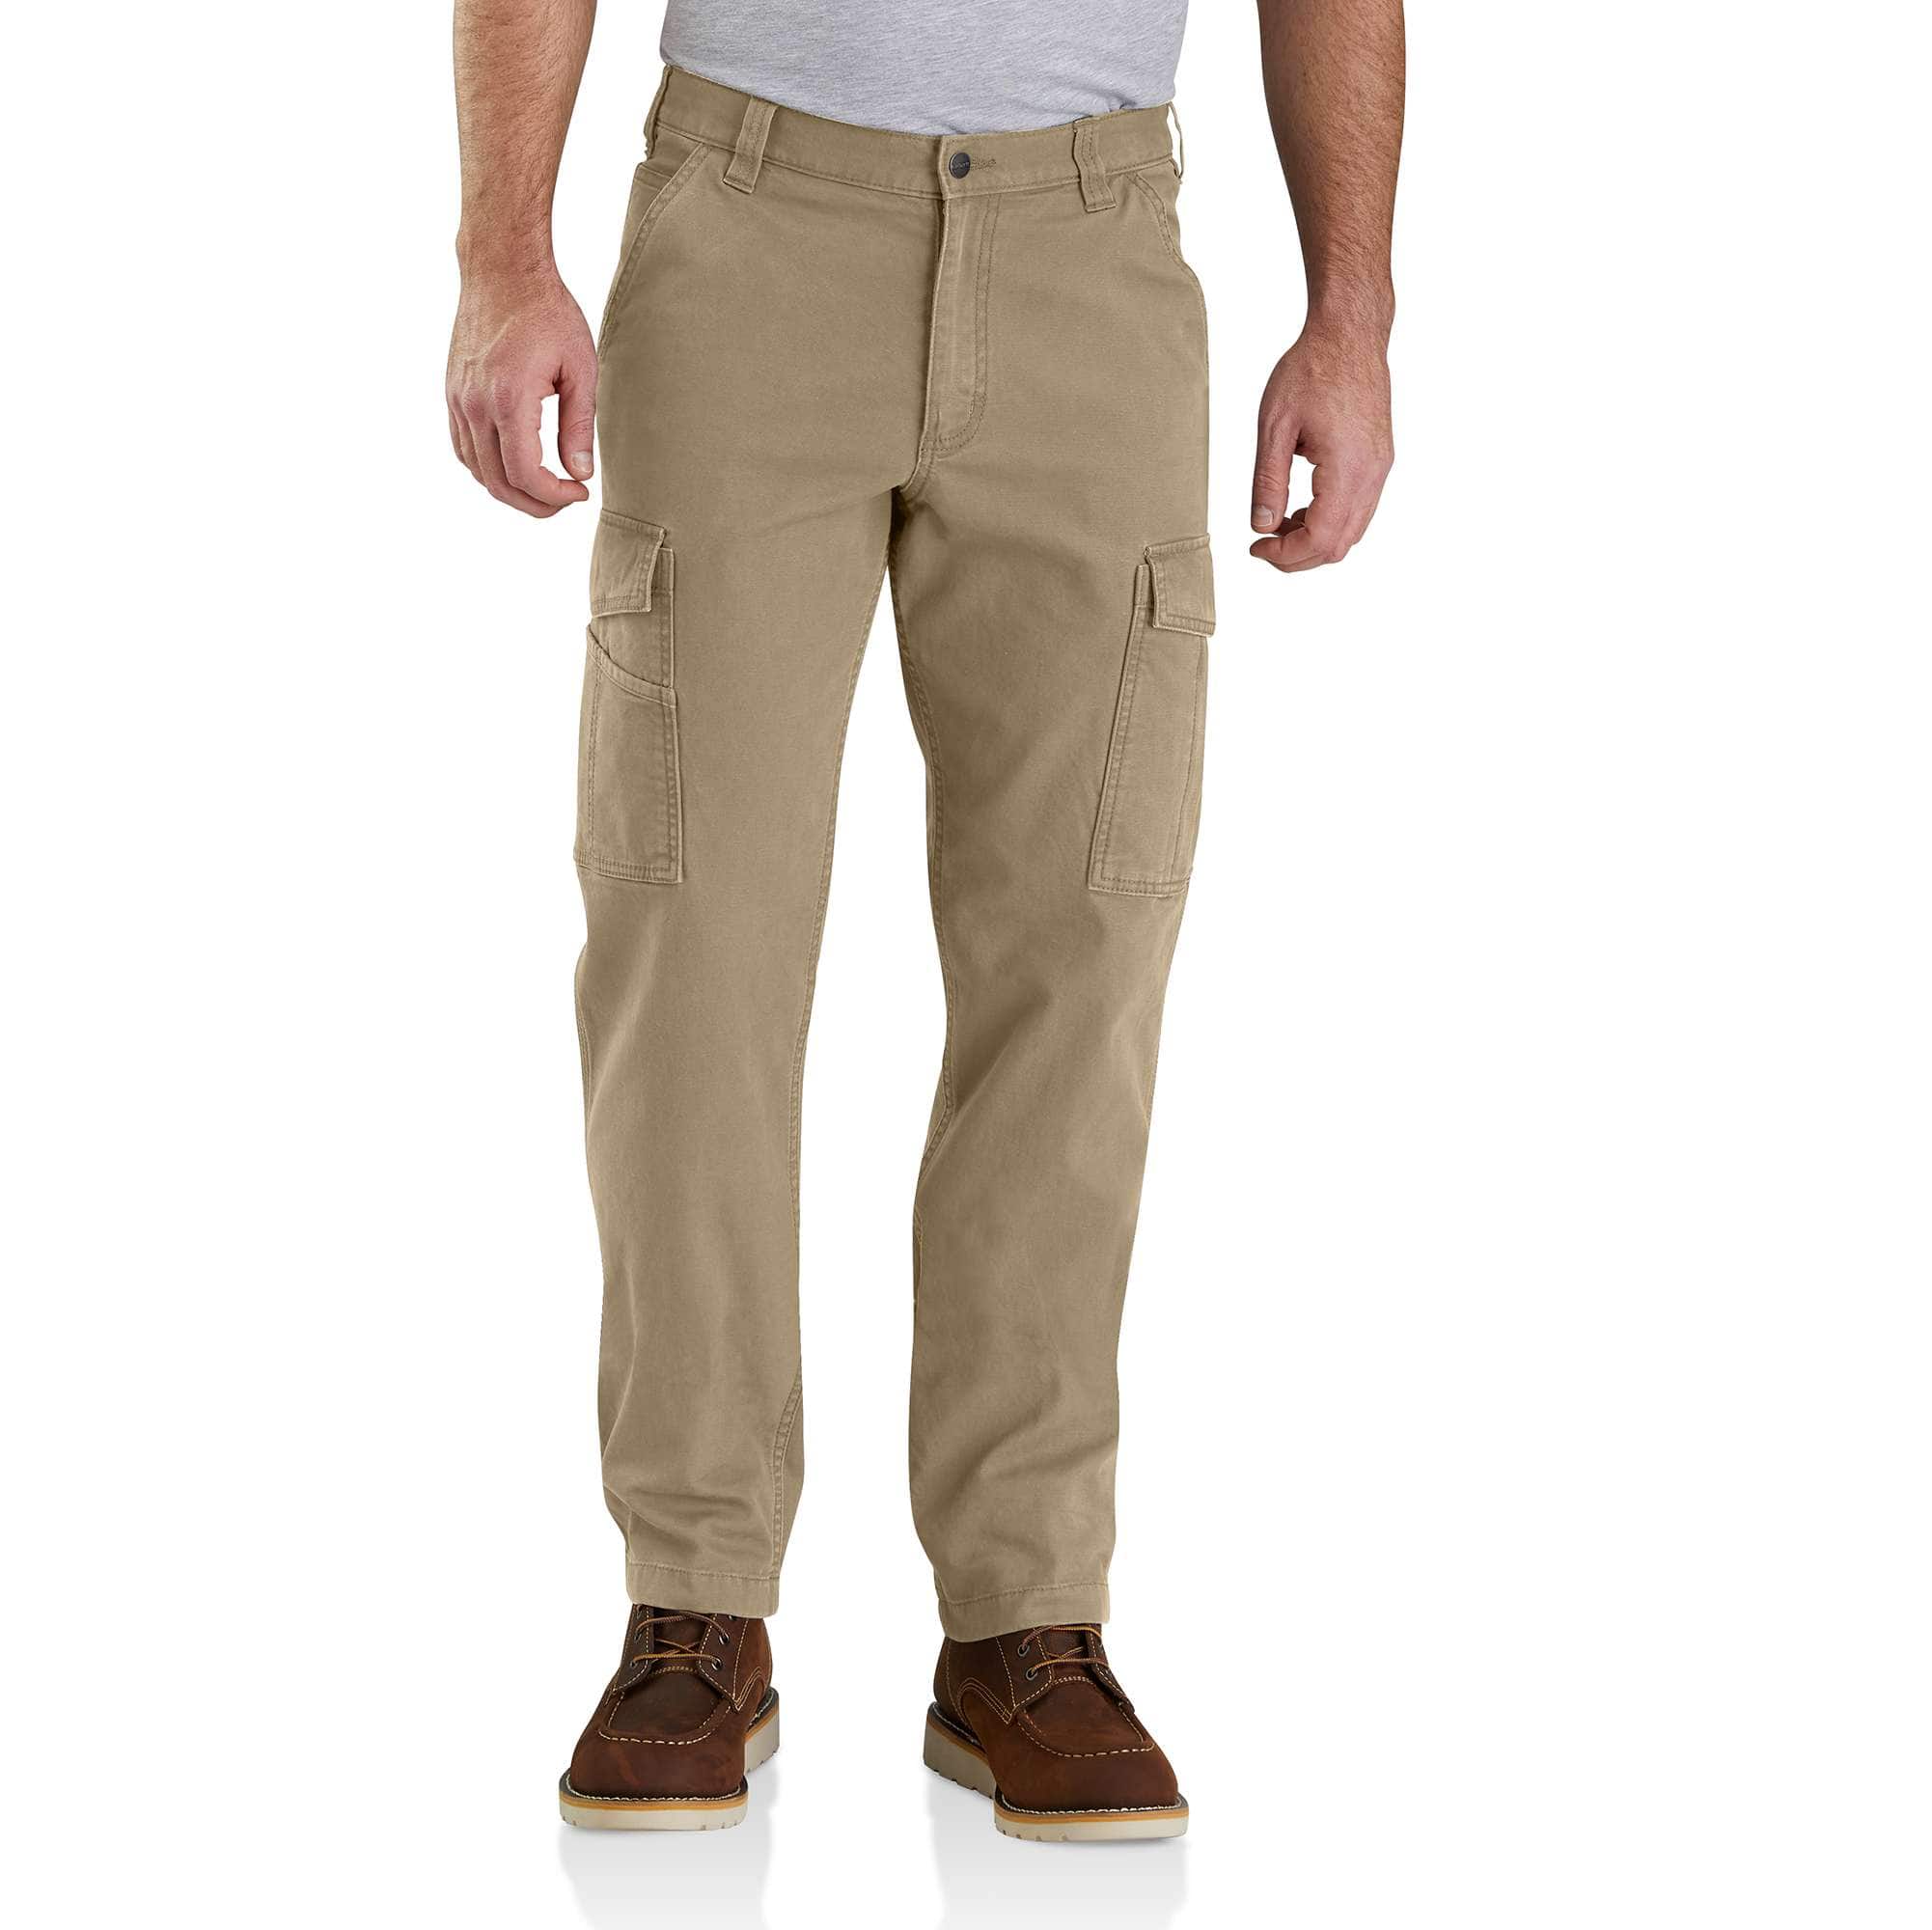 Carhartt WIP - Cargo Pants A/W 2019  Cargo pants outfit men, Pants outfit  men, Cargo pants